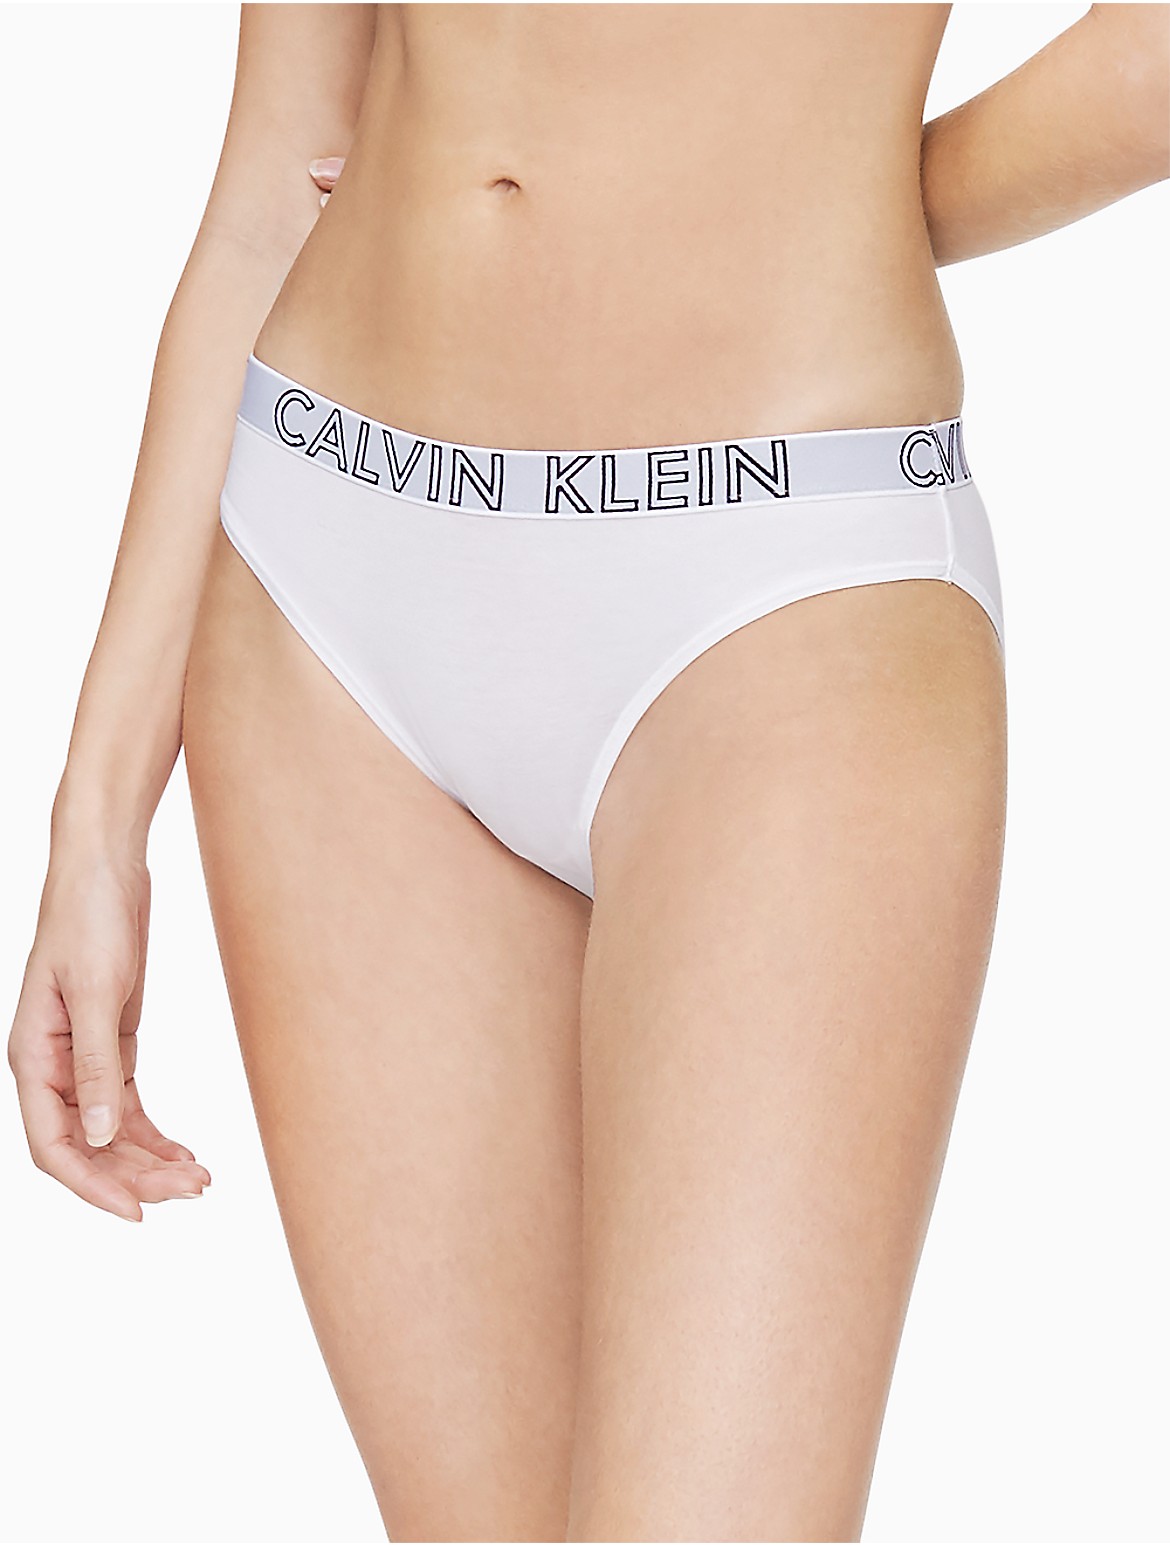 Calvin Klein Women's Ultimate Cotton Bikini Bottom - White - XS